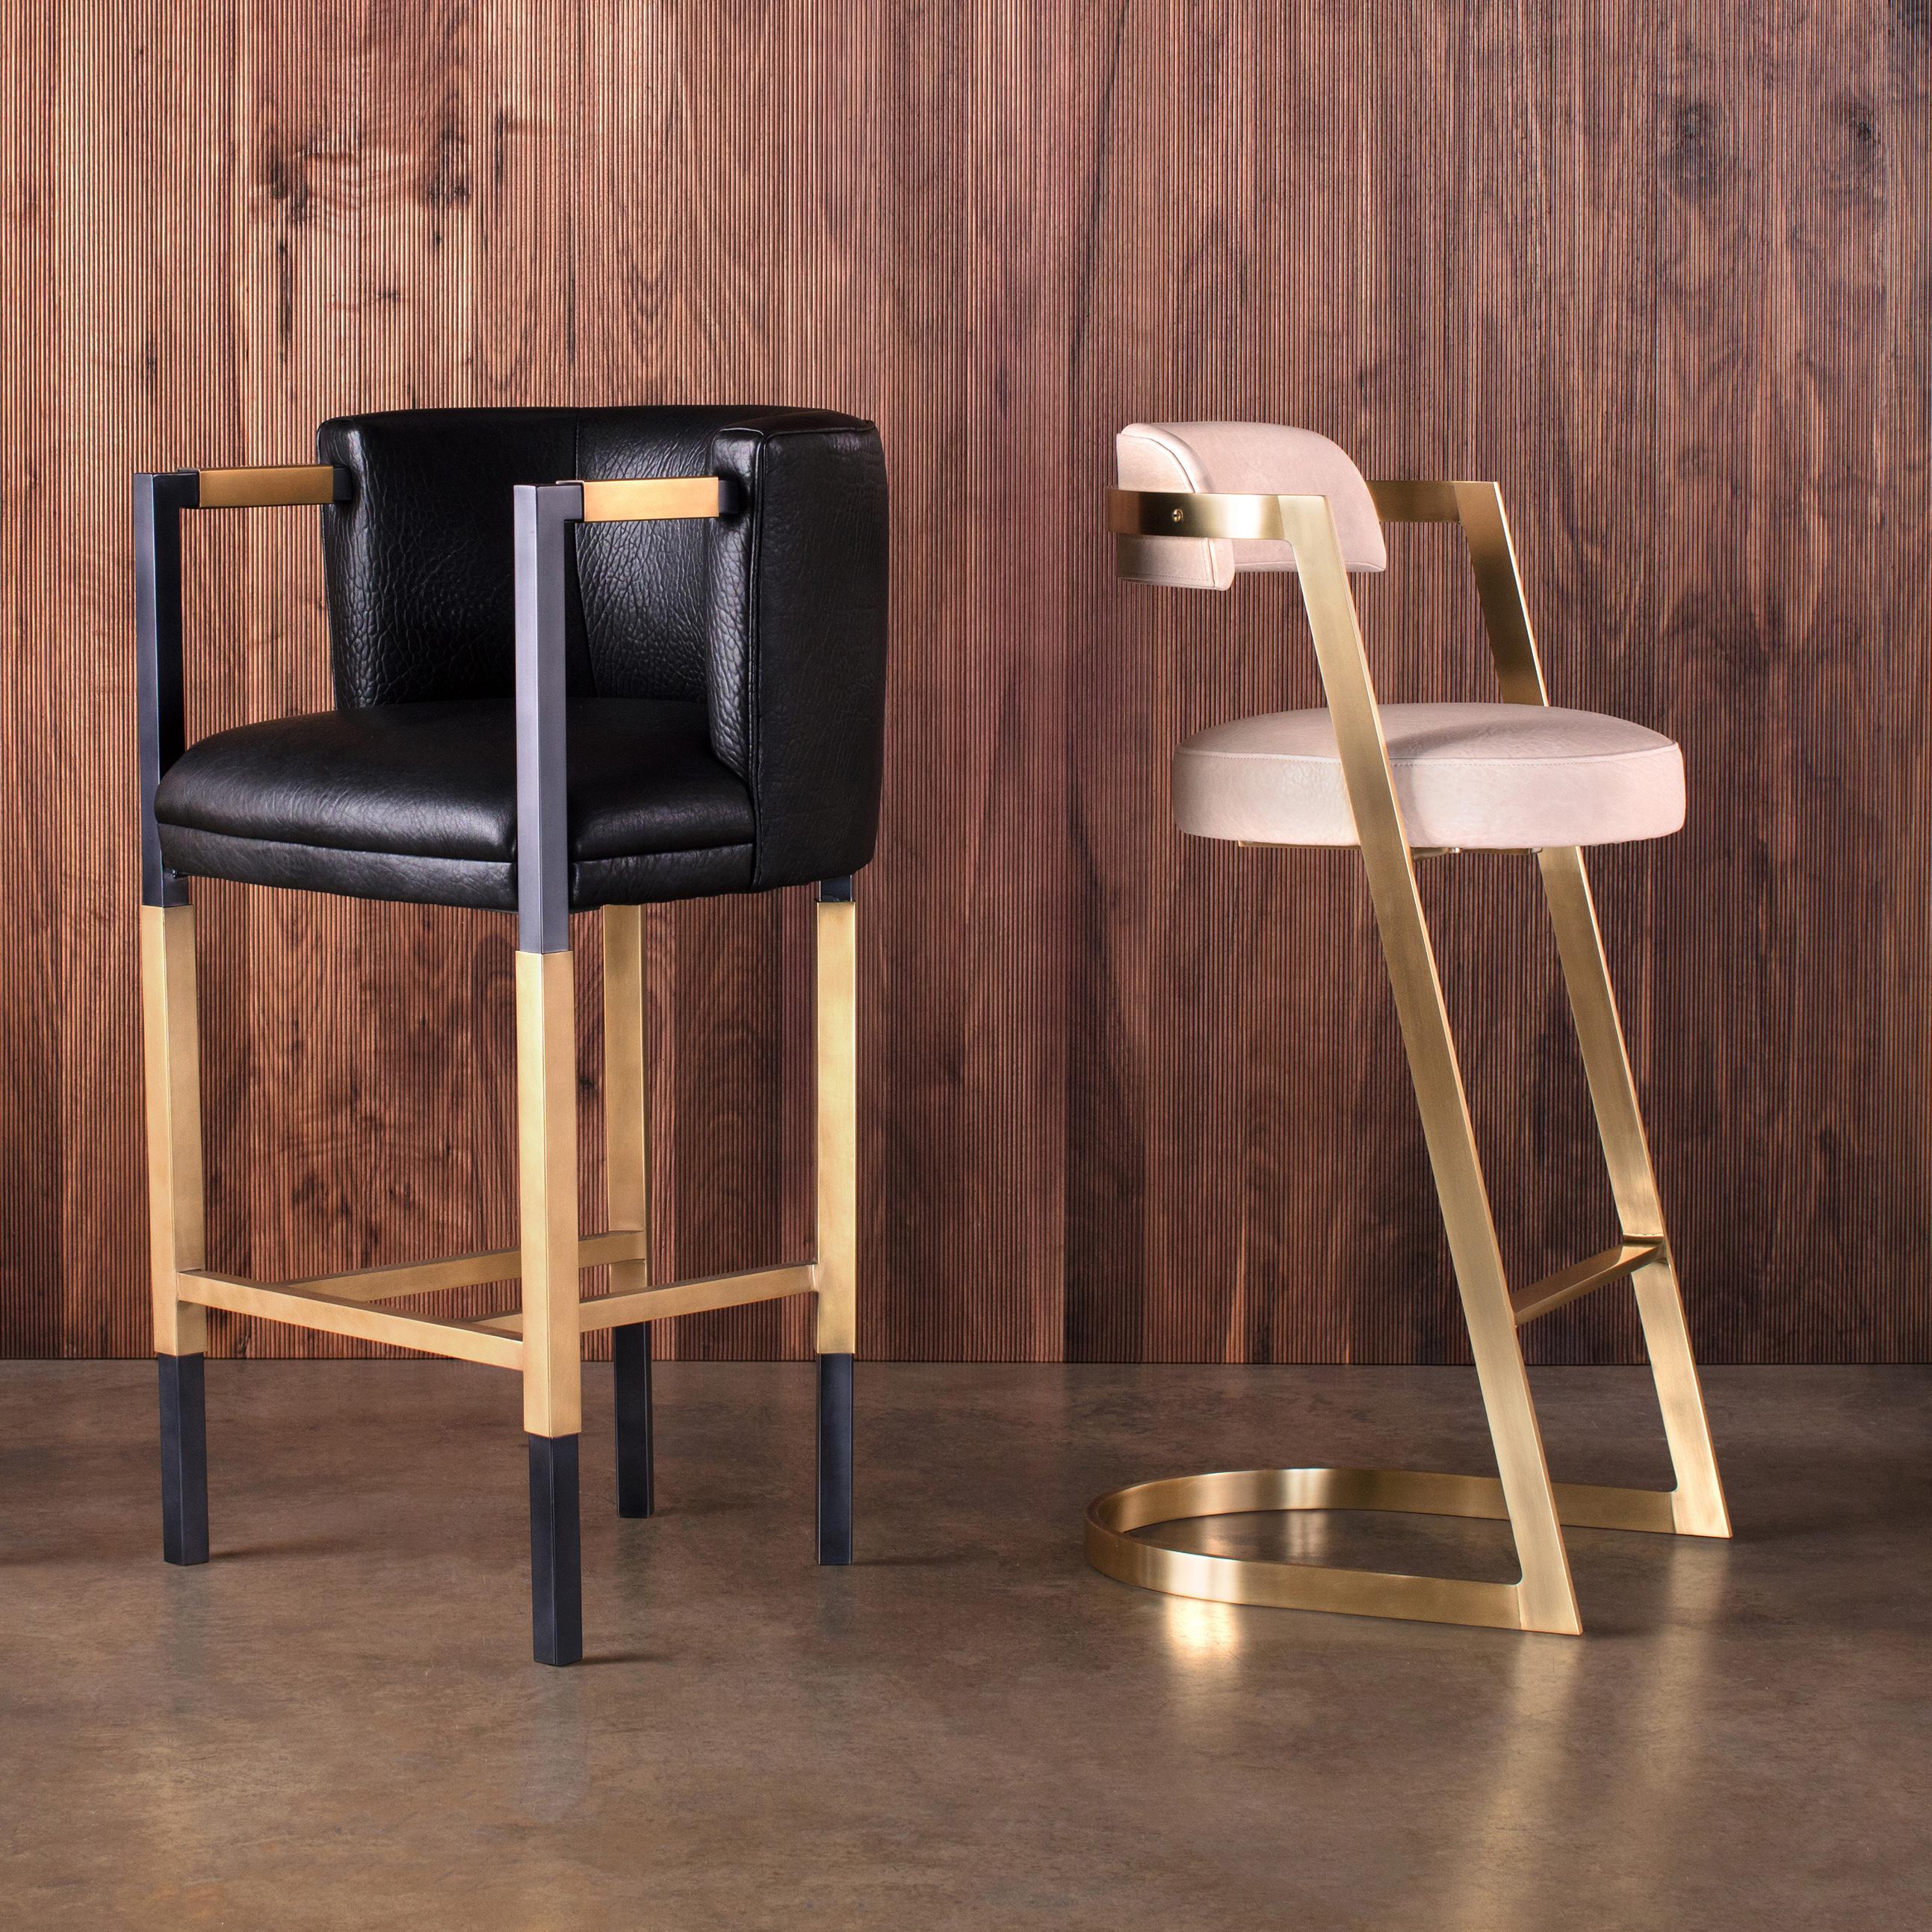 terracotta bar stools